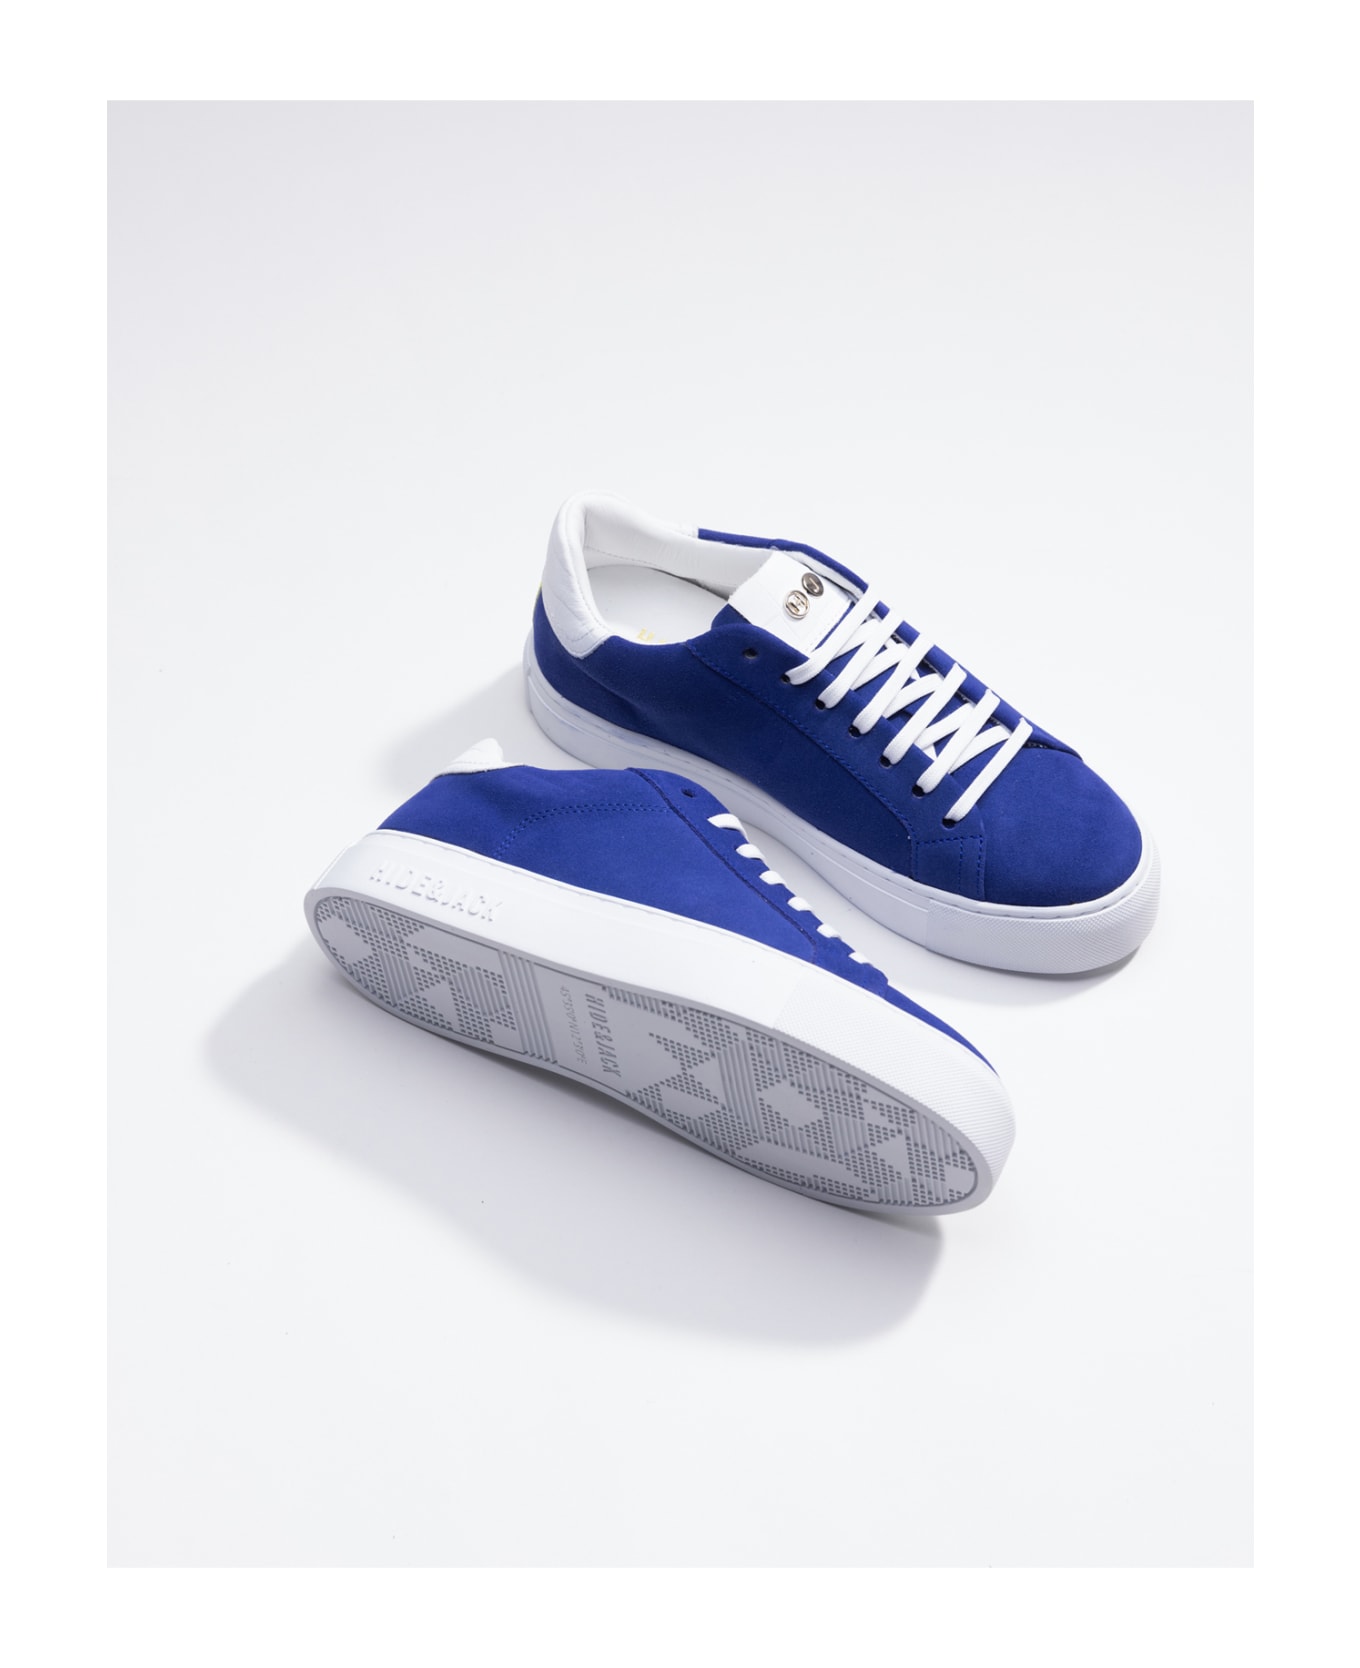 Hide&Jack Low Top Sneaker - Essence Oil Azure White スニーカー